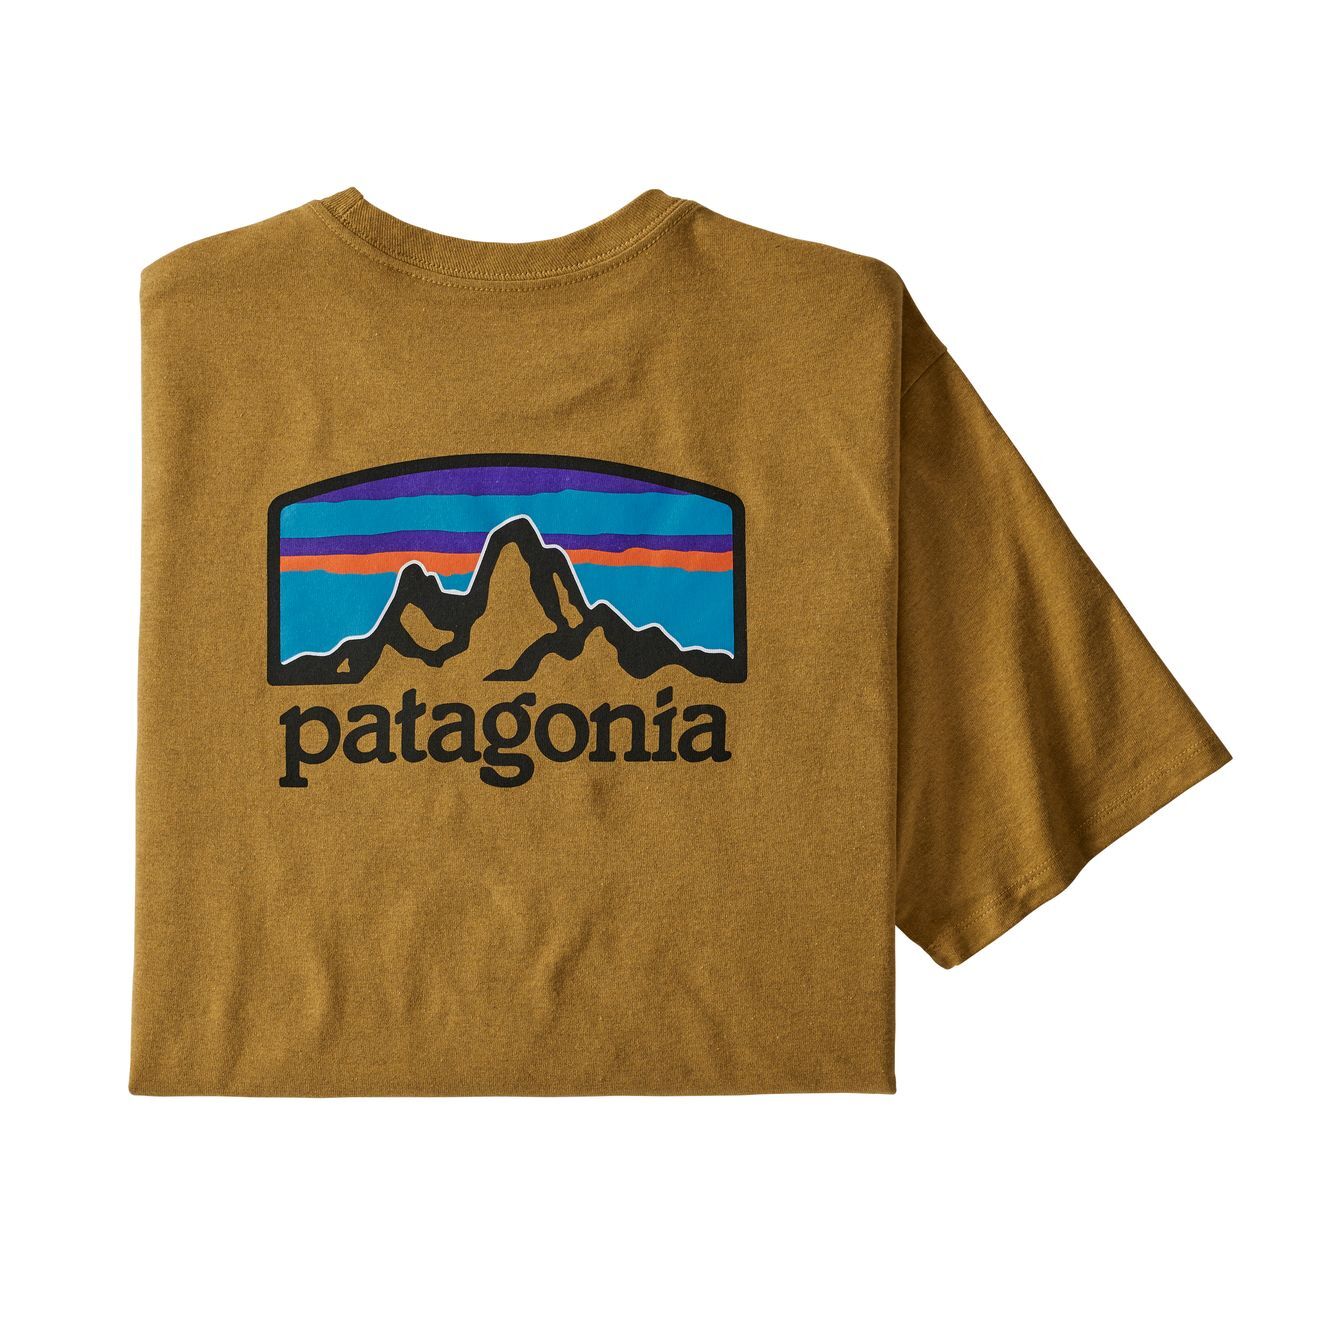 Patagonia Fitz Roy Horizons Responsibili-Tee - T-shirt - Men's